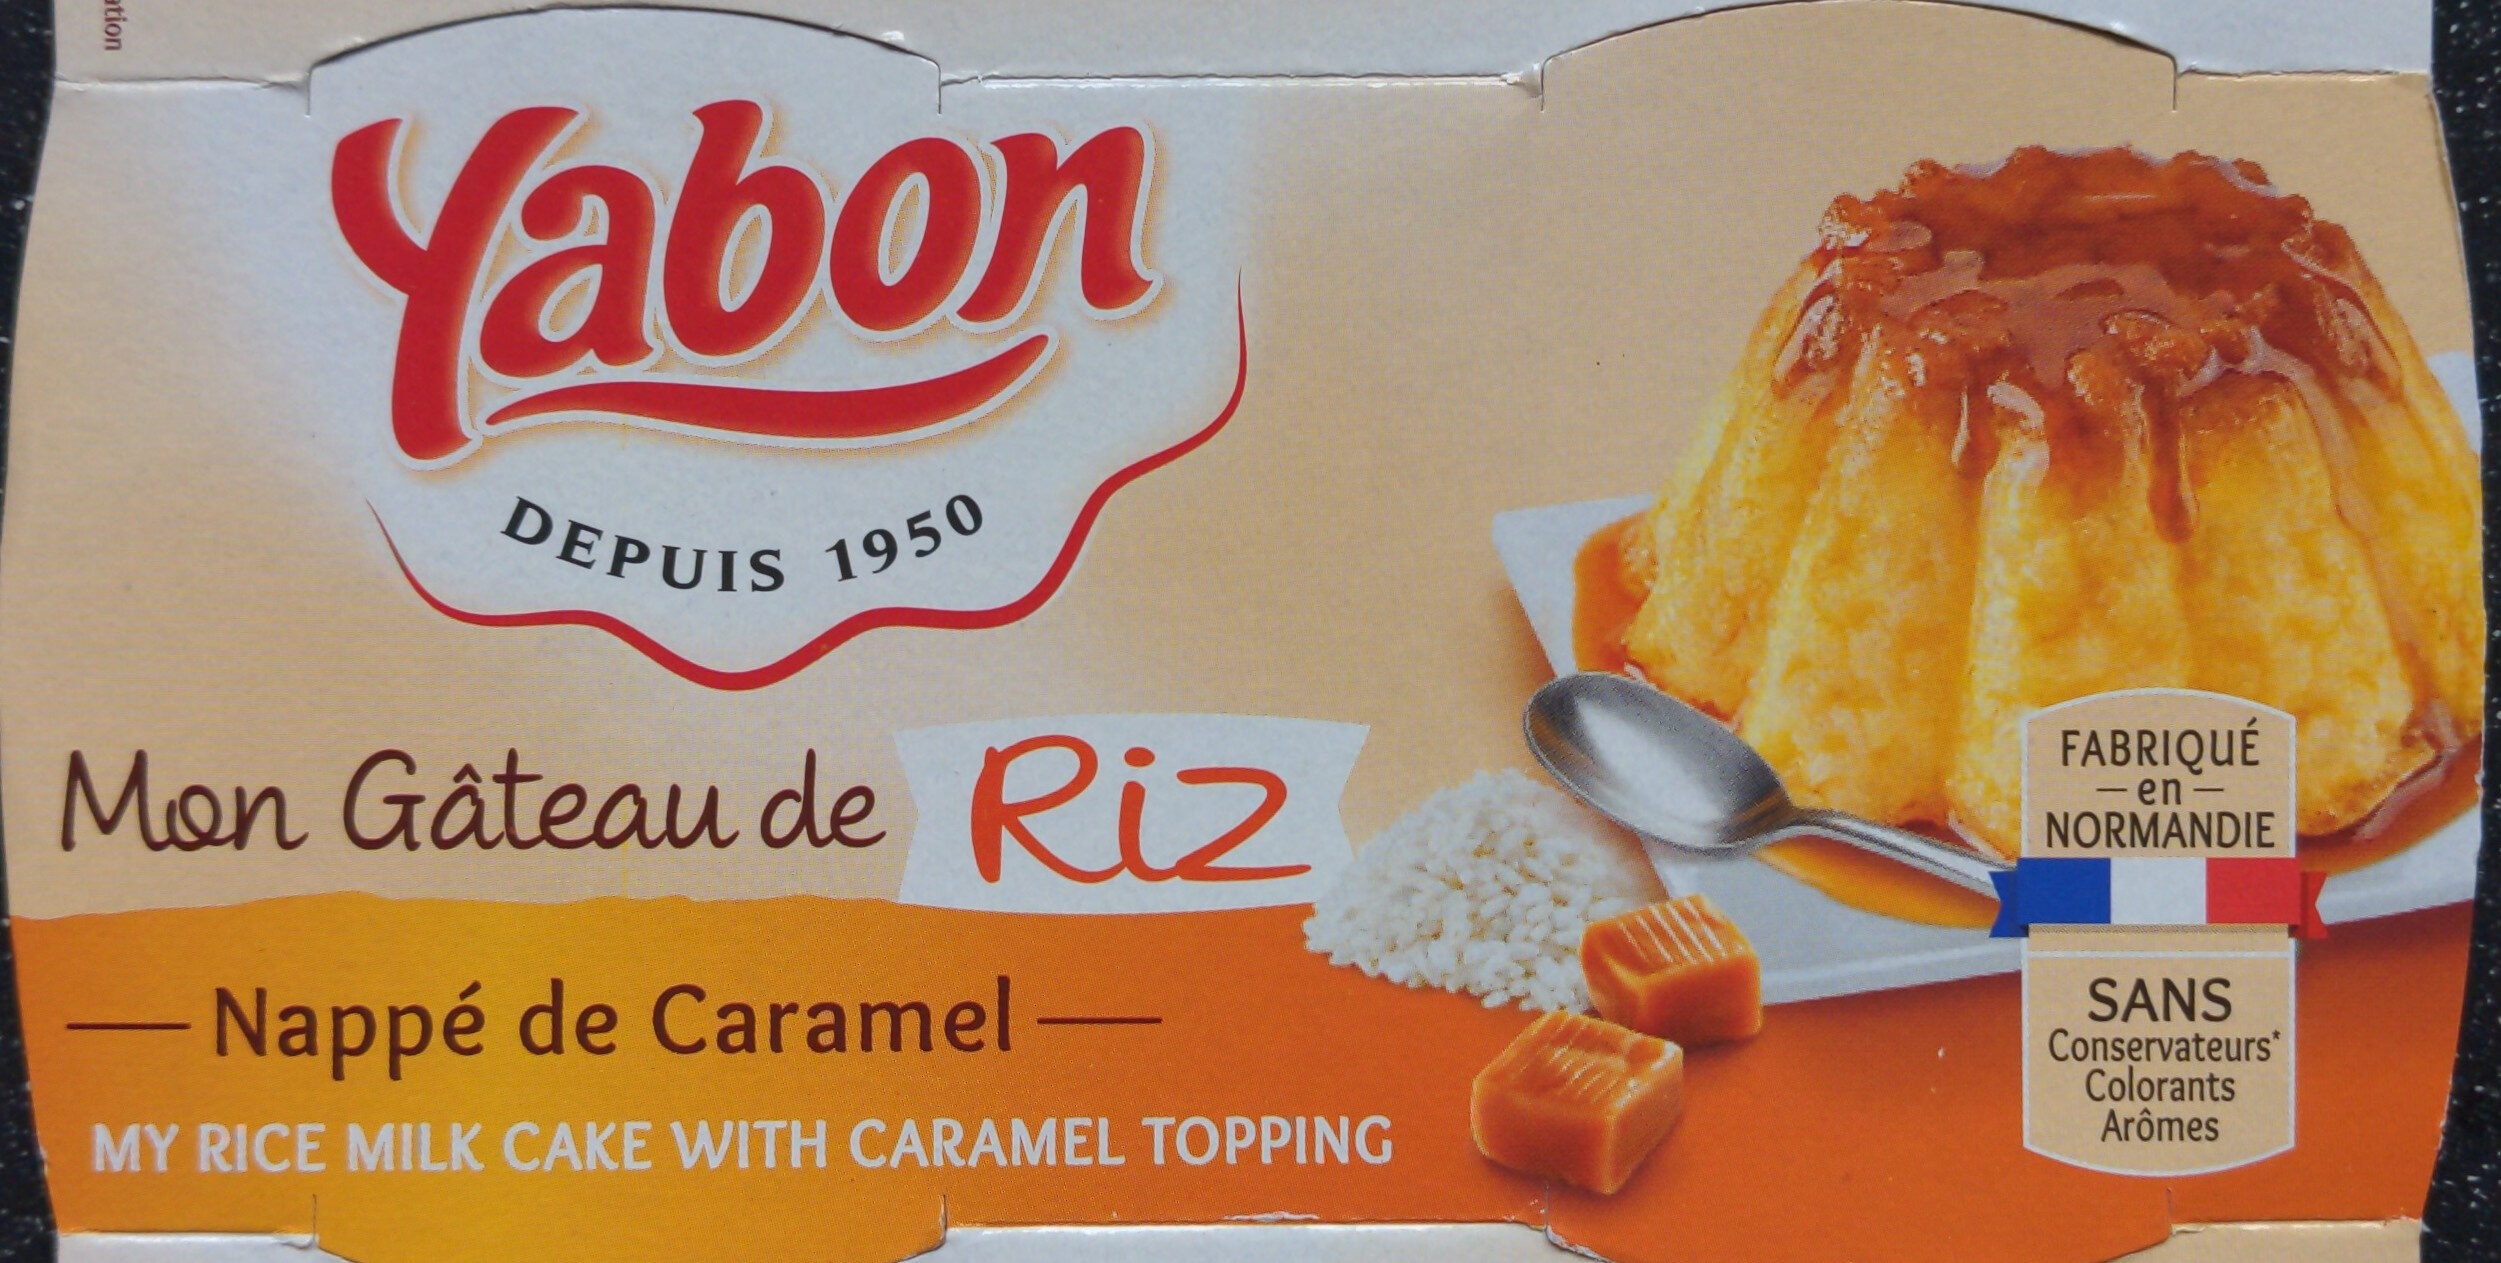 Gâteau de Riz nappage Caramel (4 pots) - Product - fr